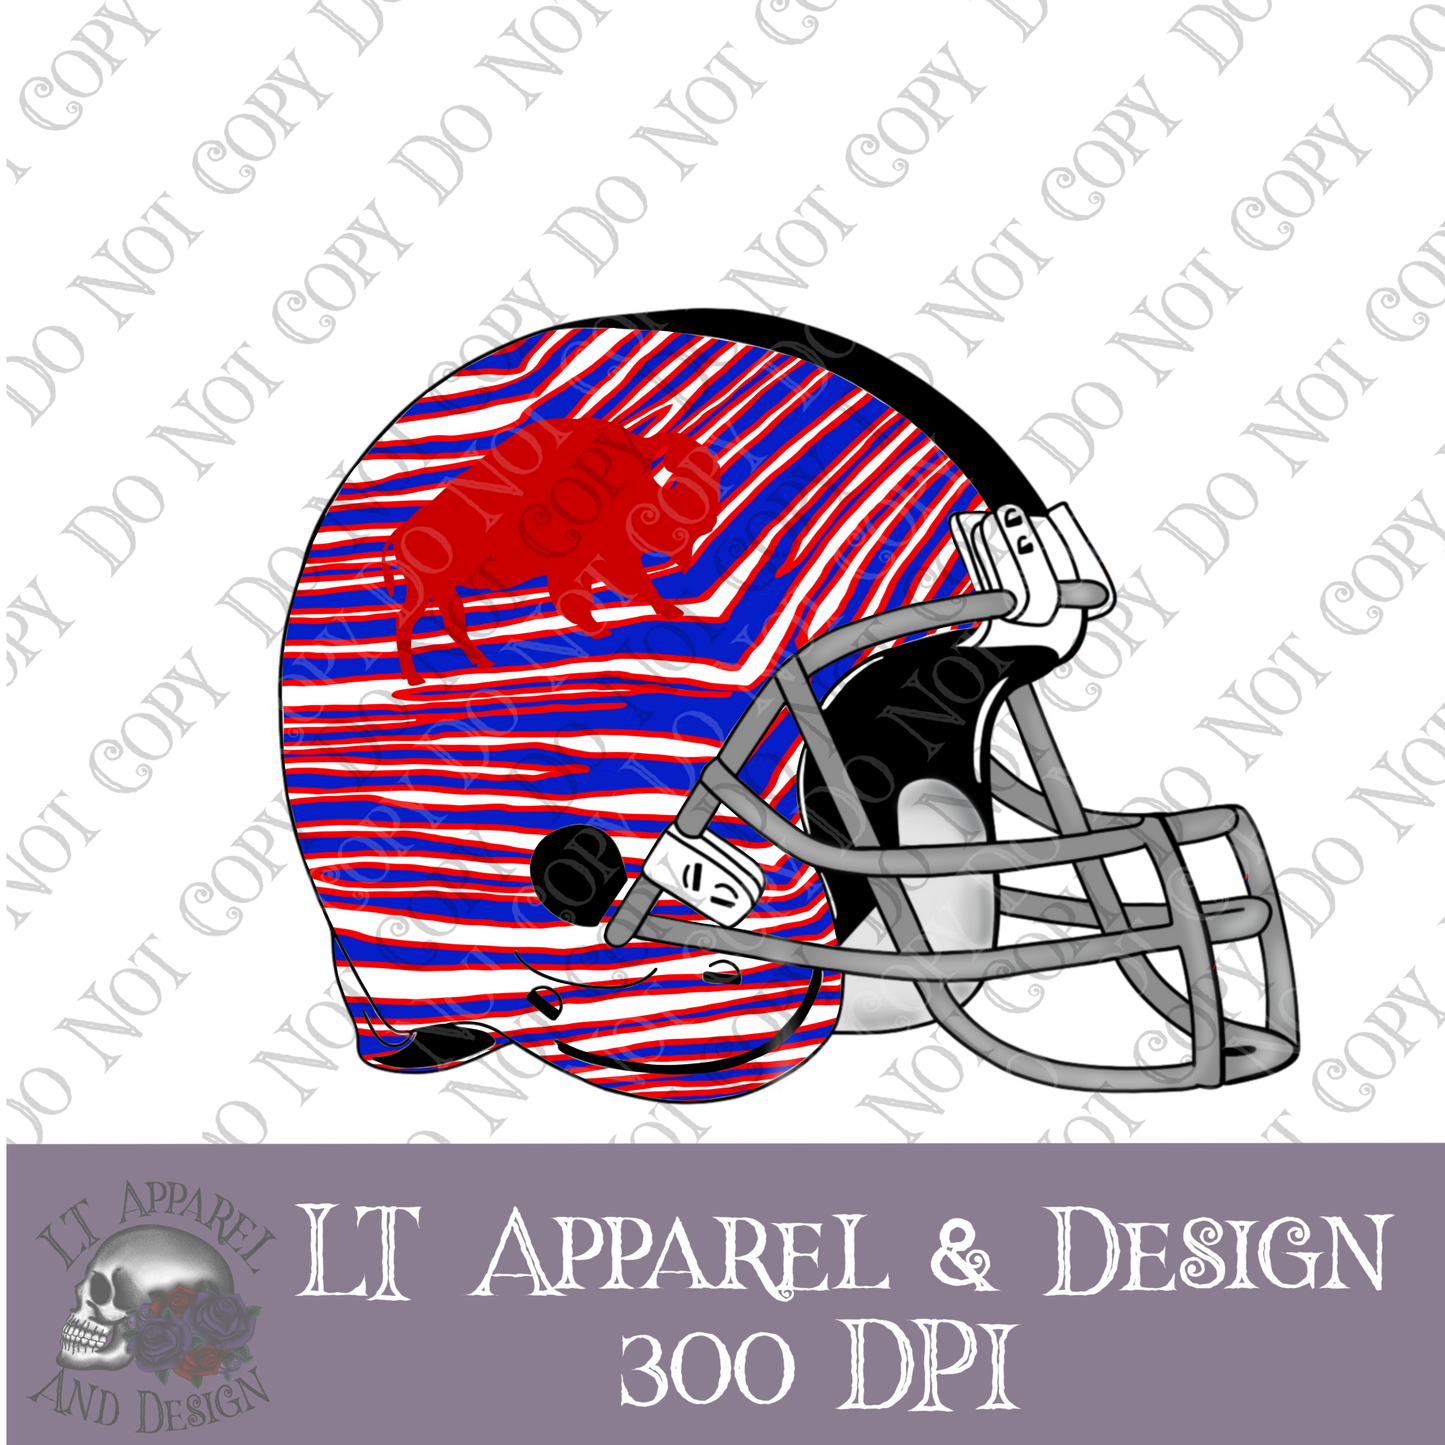 Buffalo “zebra” Buffalo helmet: "CLIP ART" PNG